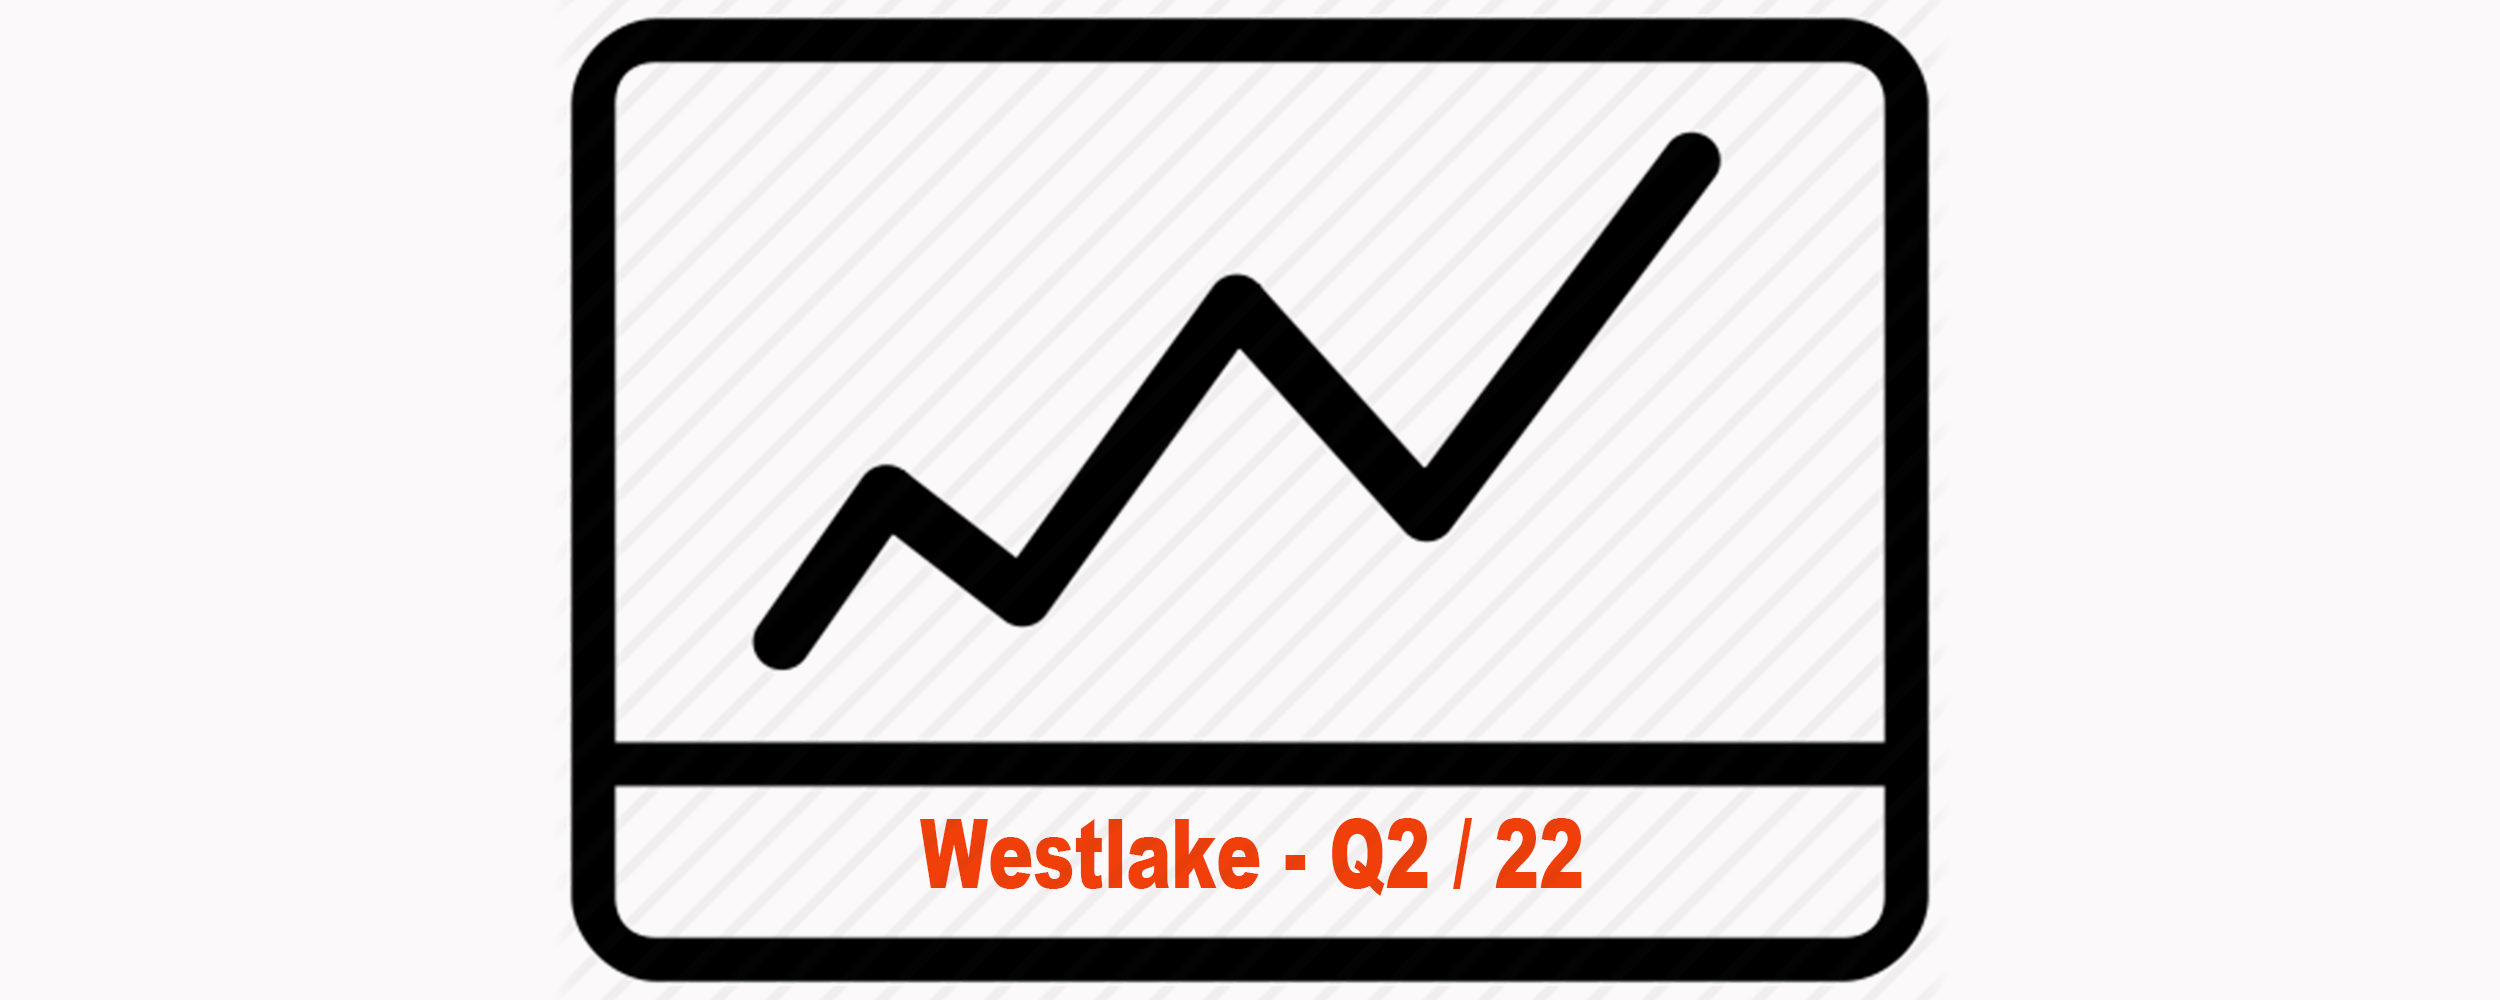 Your Local Market - Q2 / 2022 Westlake